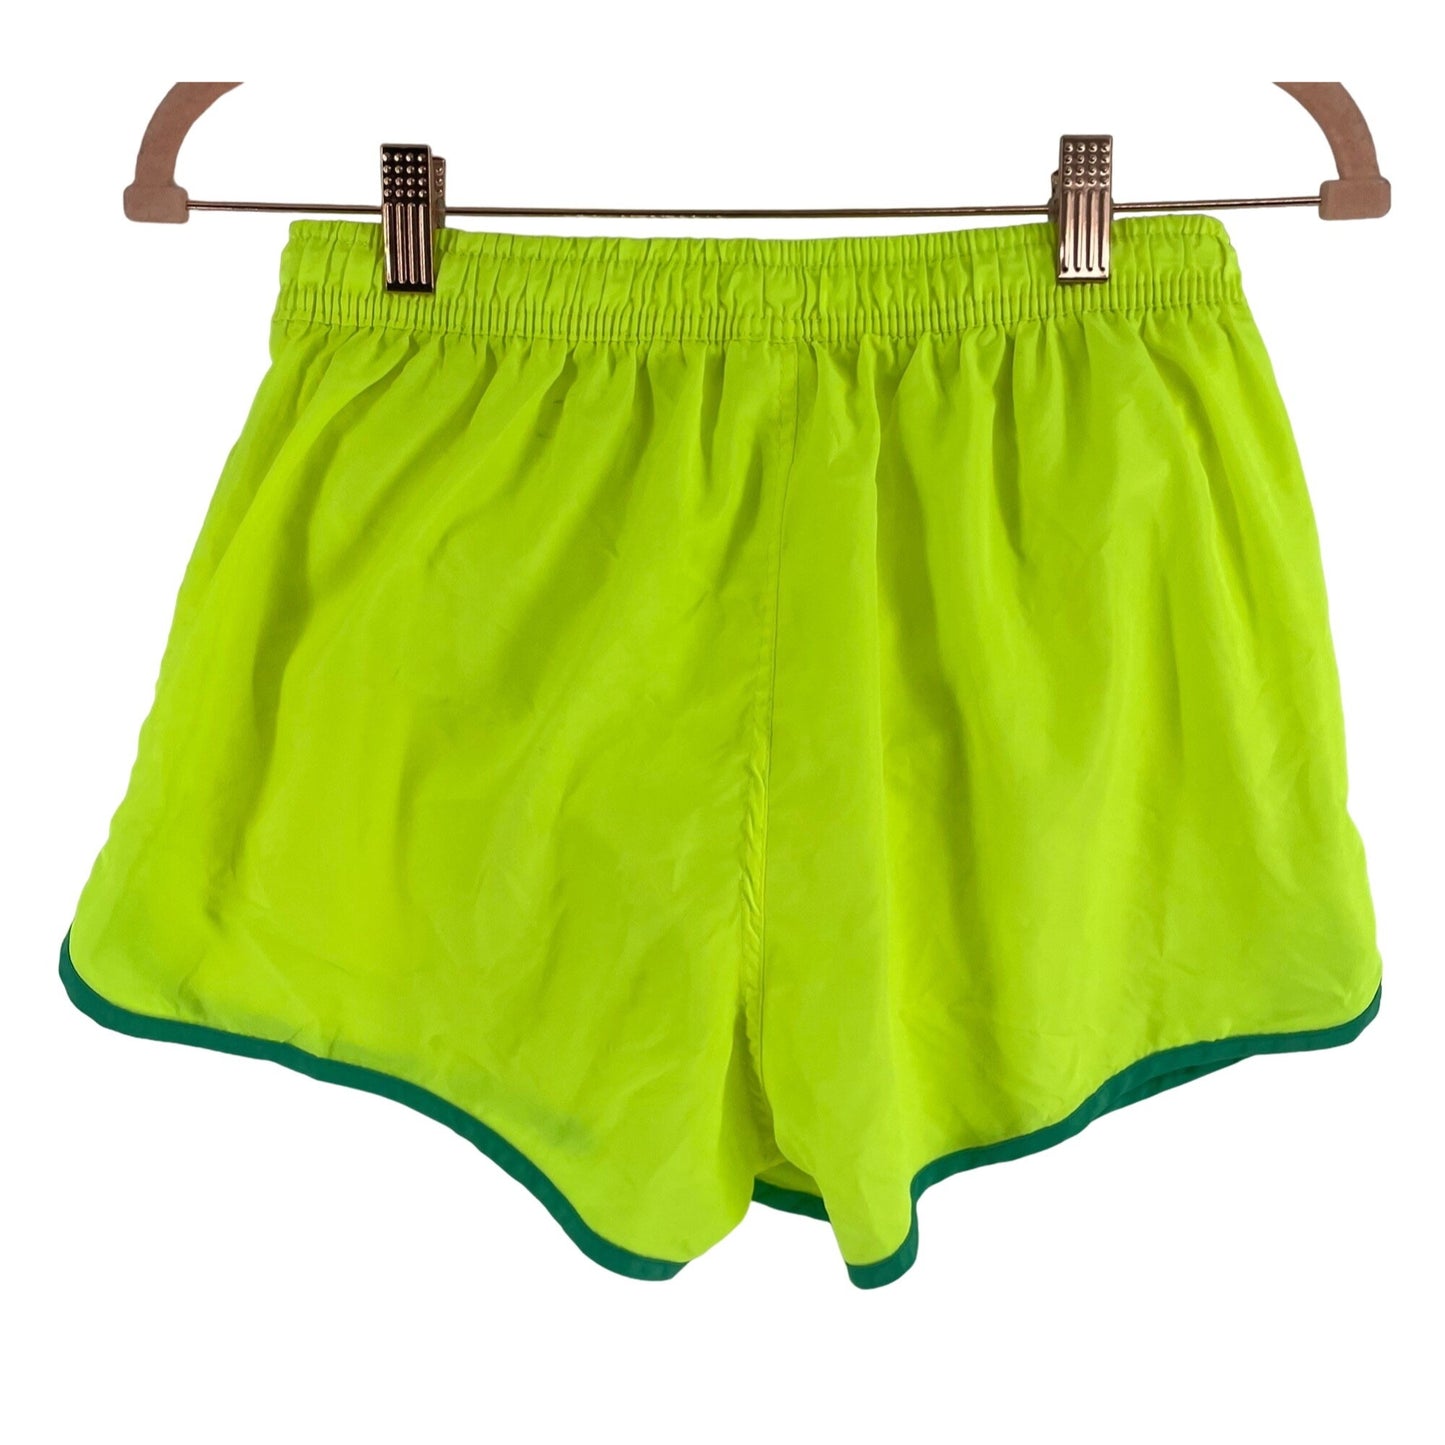 GRCF Women's Size XXL Neon Yellow & Teal Athletic Shorts W/ Elastic Waist & Drawstring